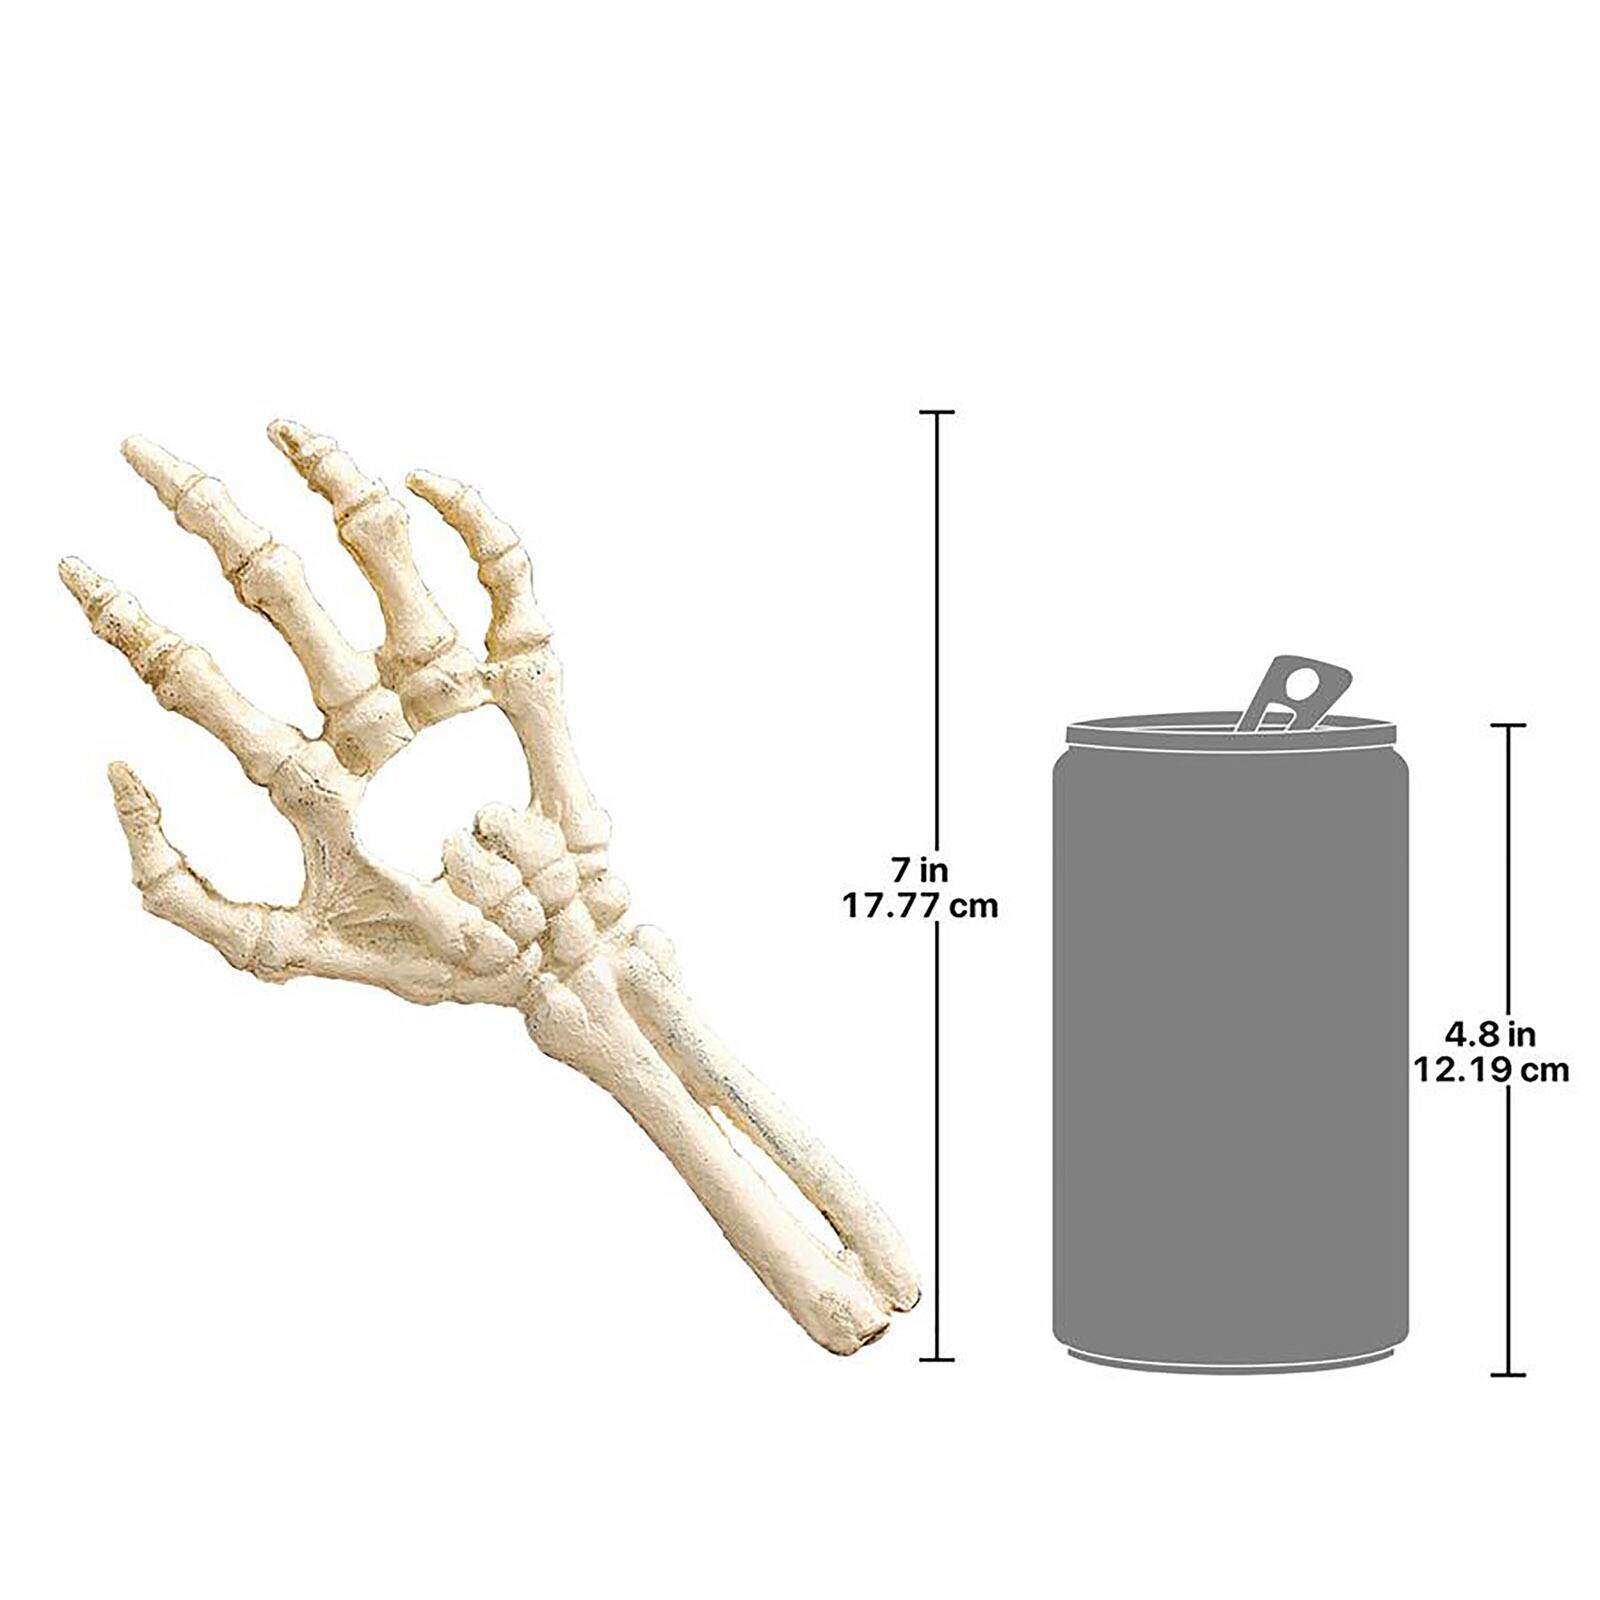 Design Toscano The Skeleton Hand of Destiny Cast Iron Bottle Opener